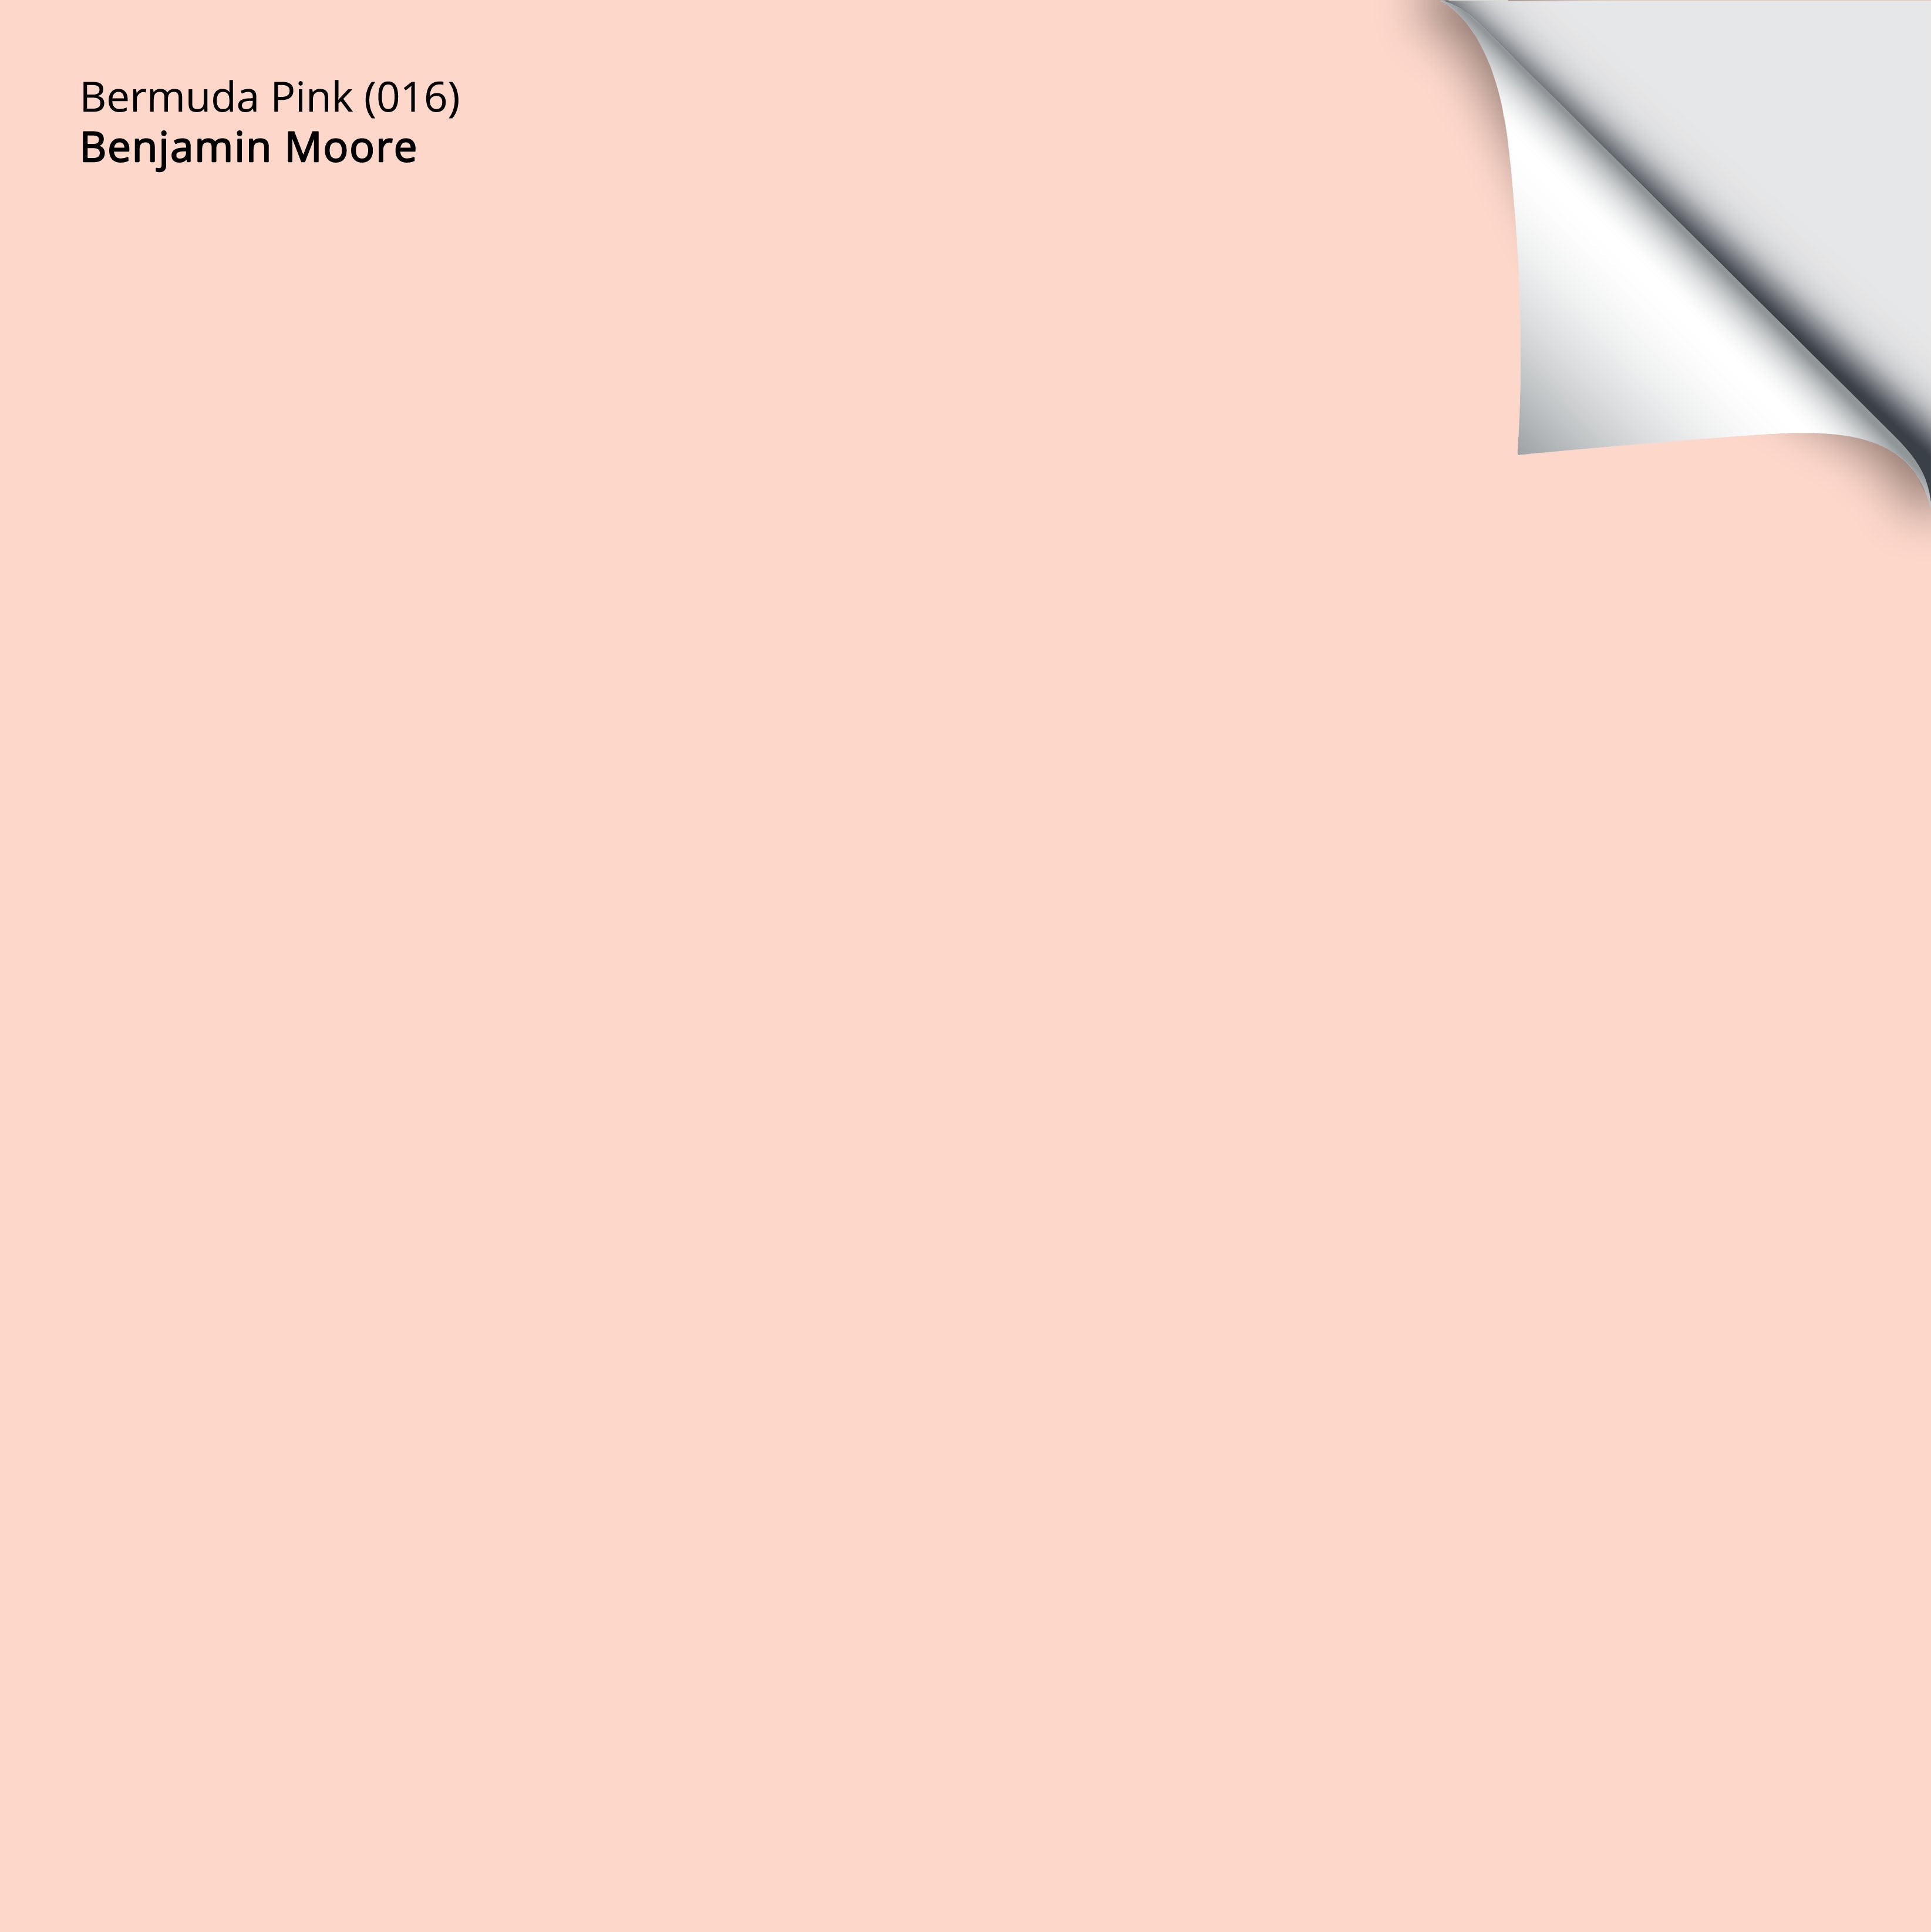 Bermuda Pink (016): 9x14.75